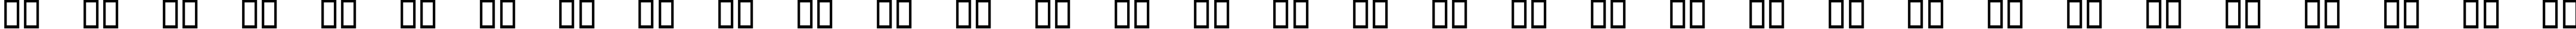 Пример написания русского алфавита шрифтом Wingdings 3